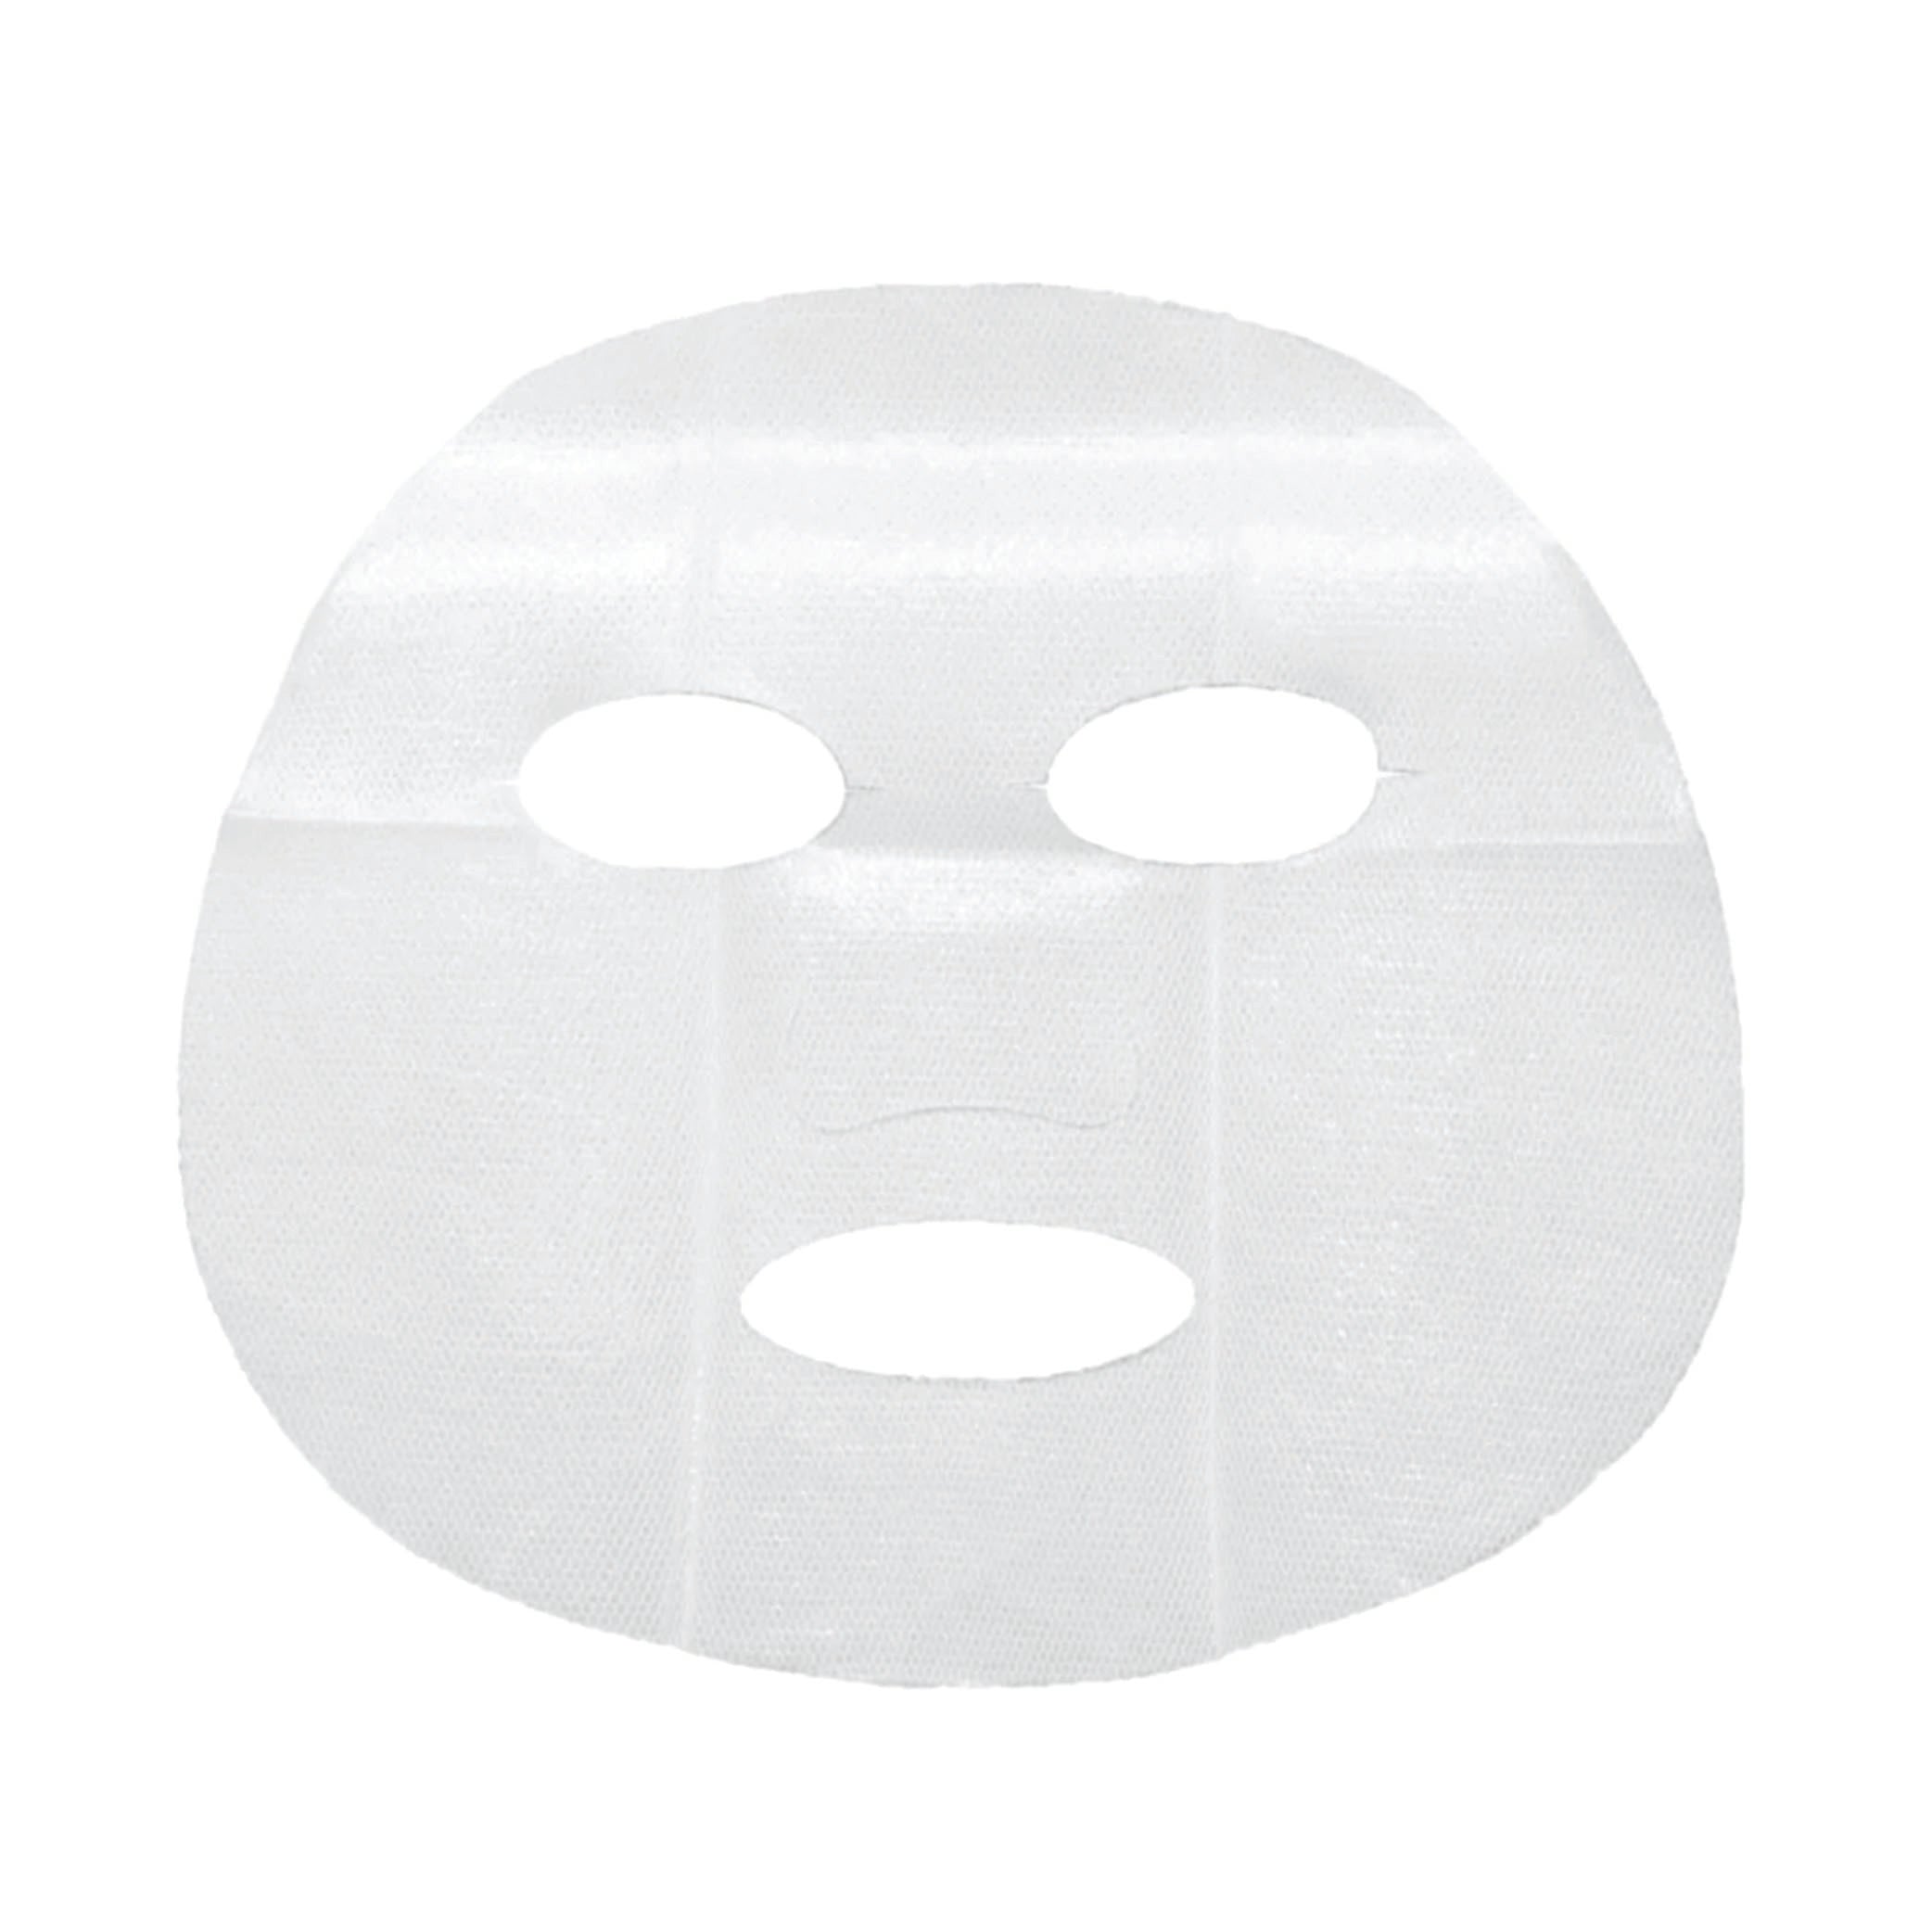 GM Collin Biocellulose Facial Mask